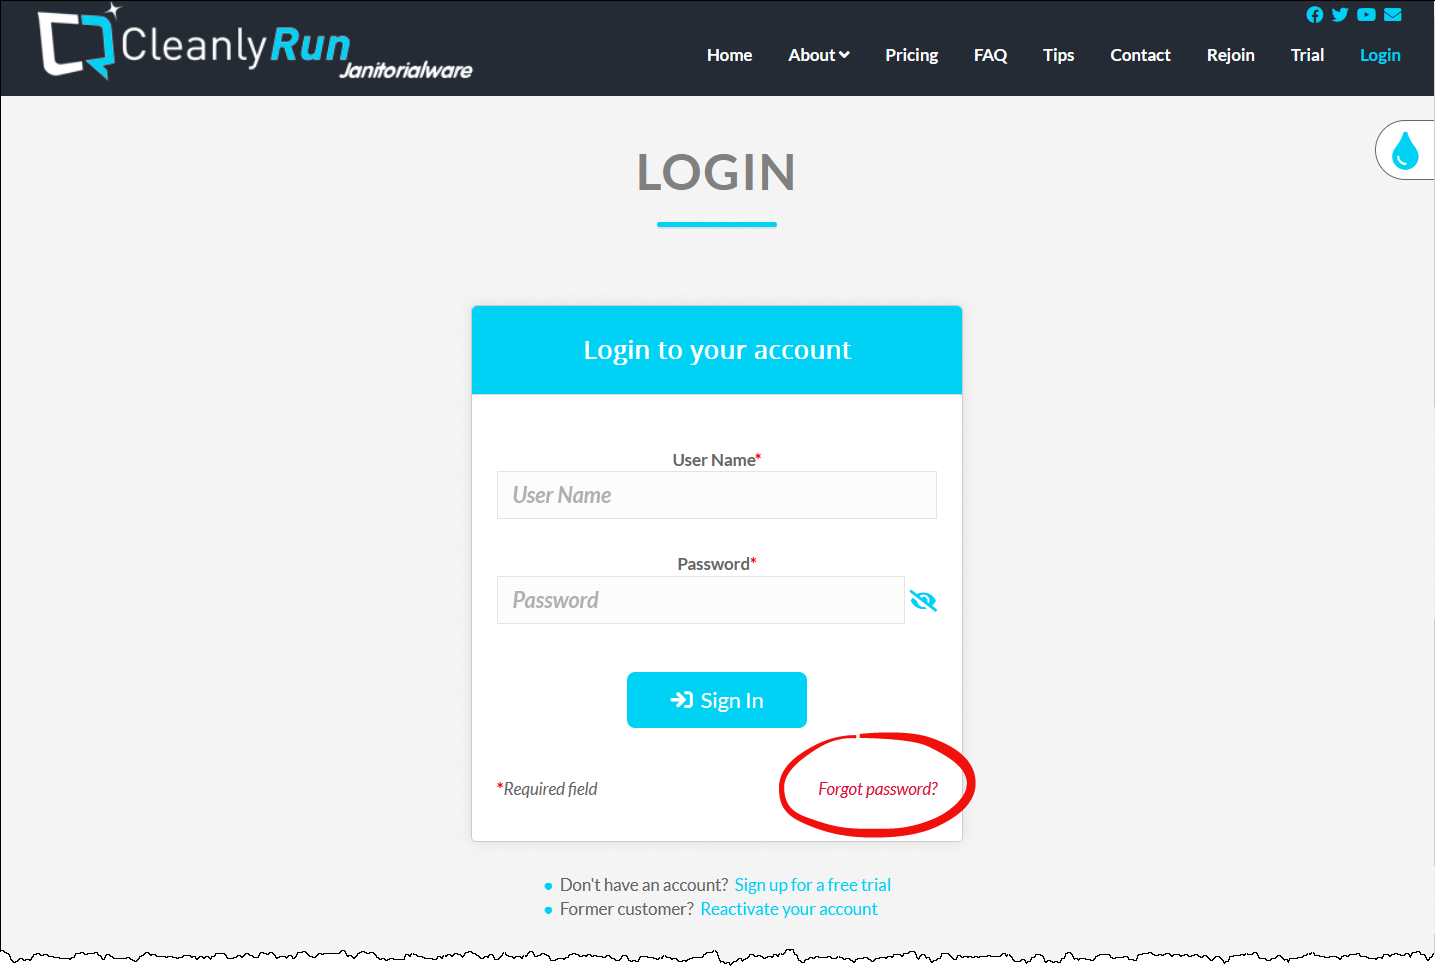 CleanlyRun Login page screenshot - The Forgot Password link is circled